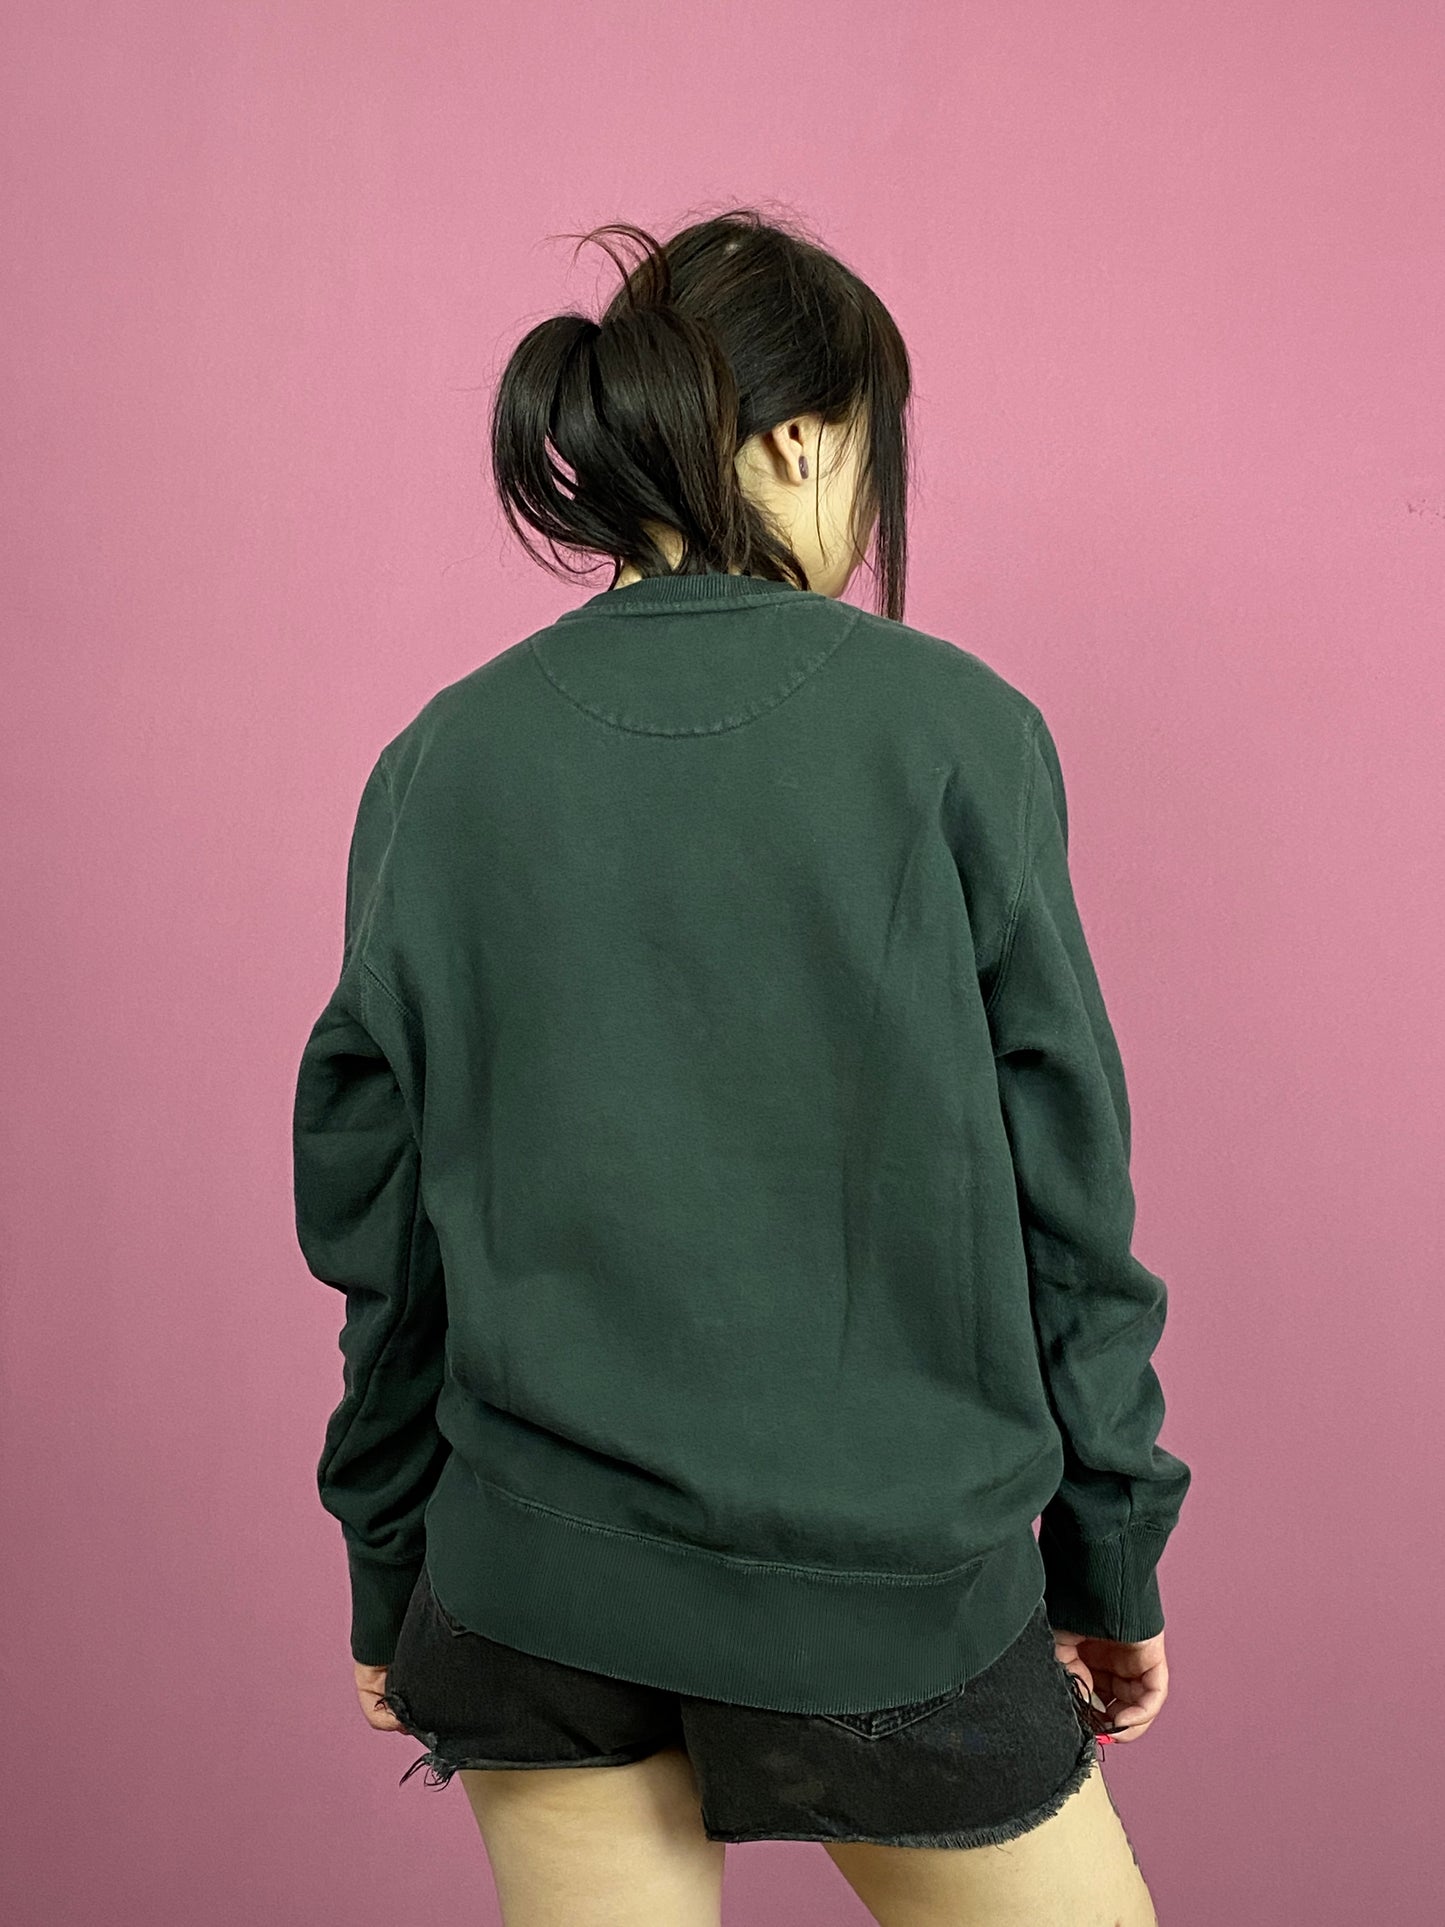 Nike Vintage Women's Sweatshirt - Large Green Cotton Blend